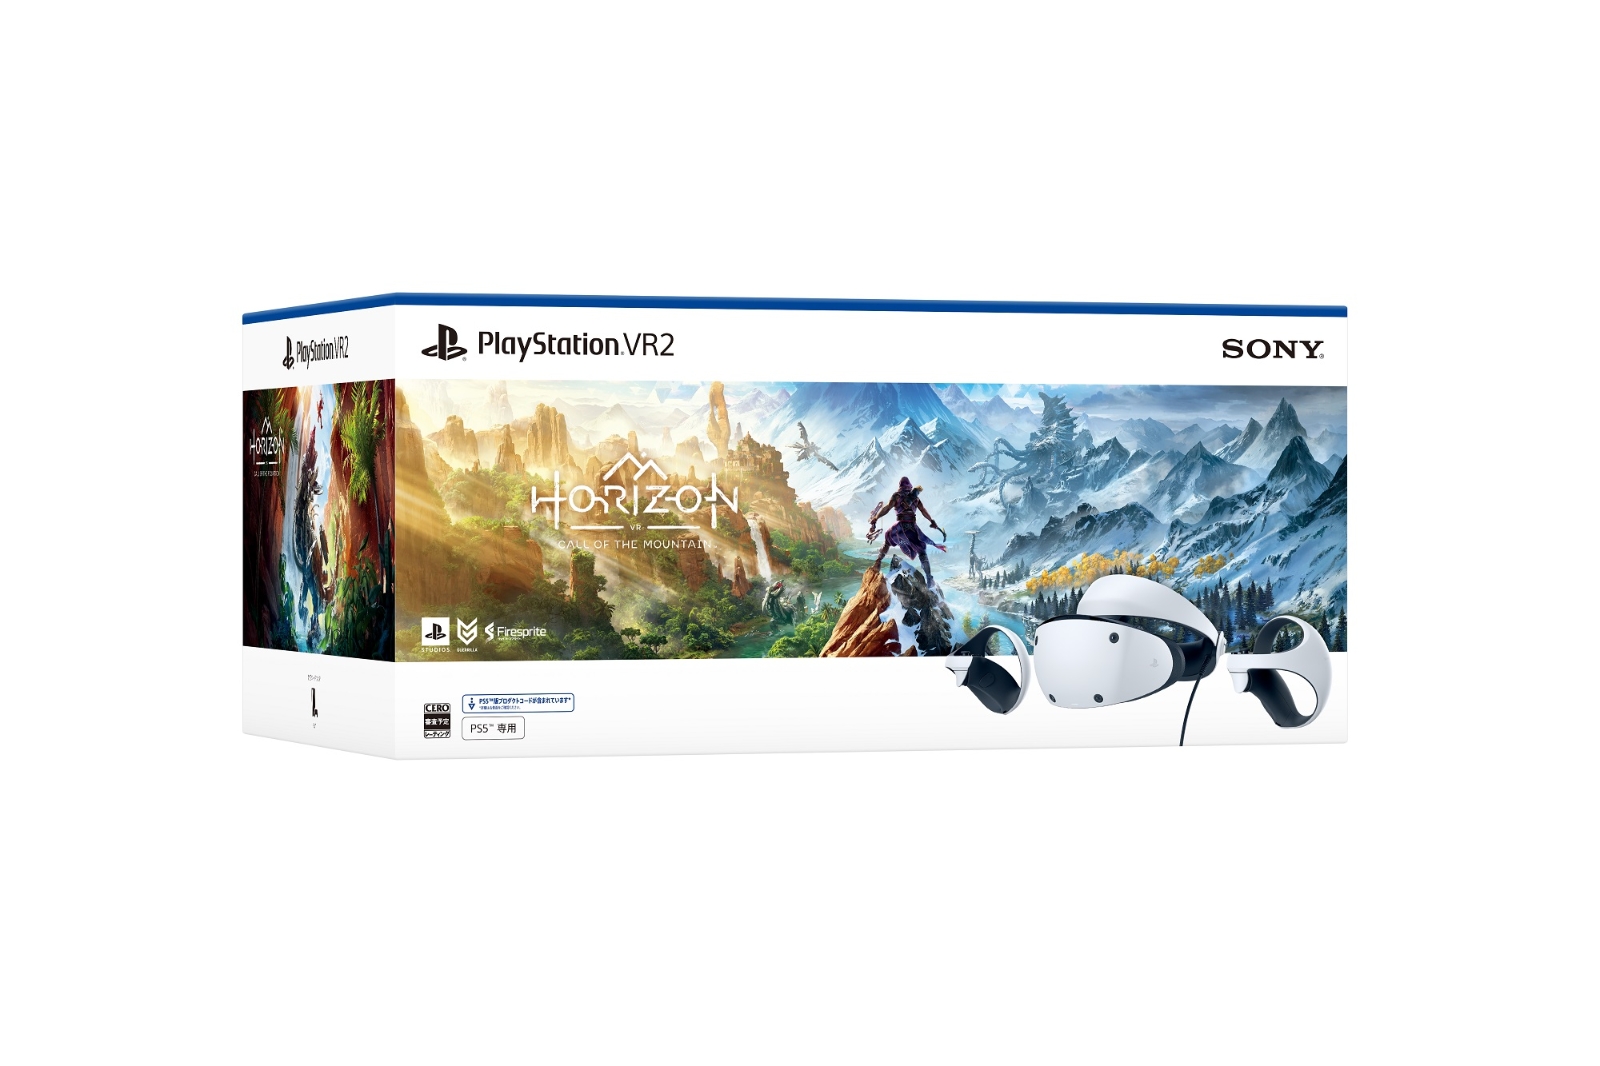 【SONY】PS5 PlayStation VR2 通常版【送料無料】